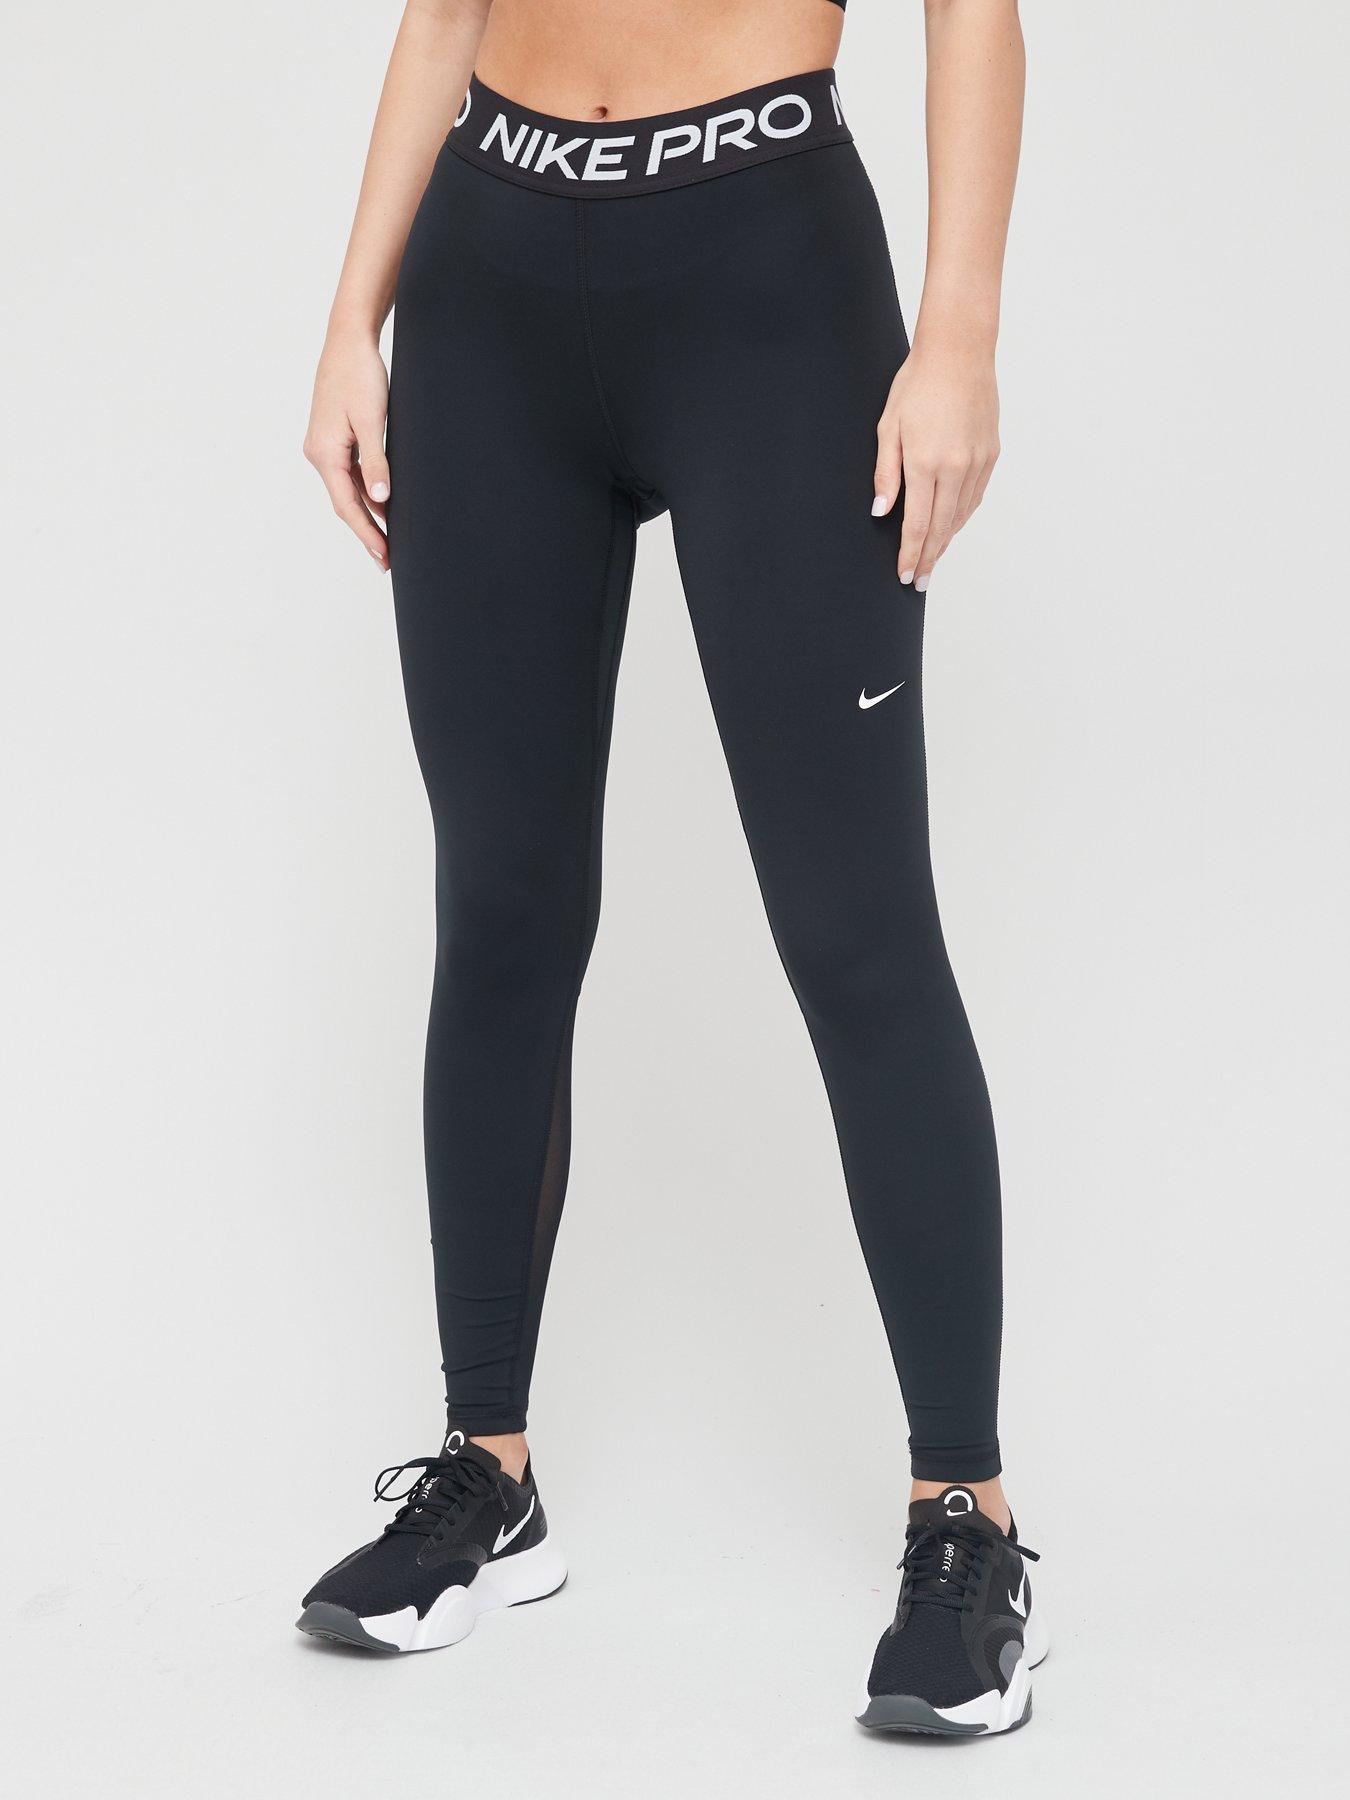  Nike Women's Pro 365 Crop Tight (Black/White, X-Small